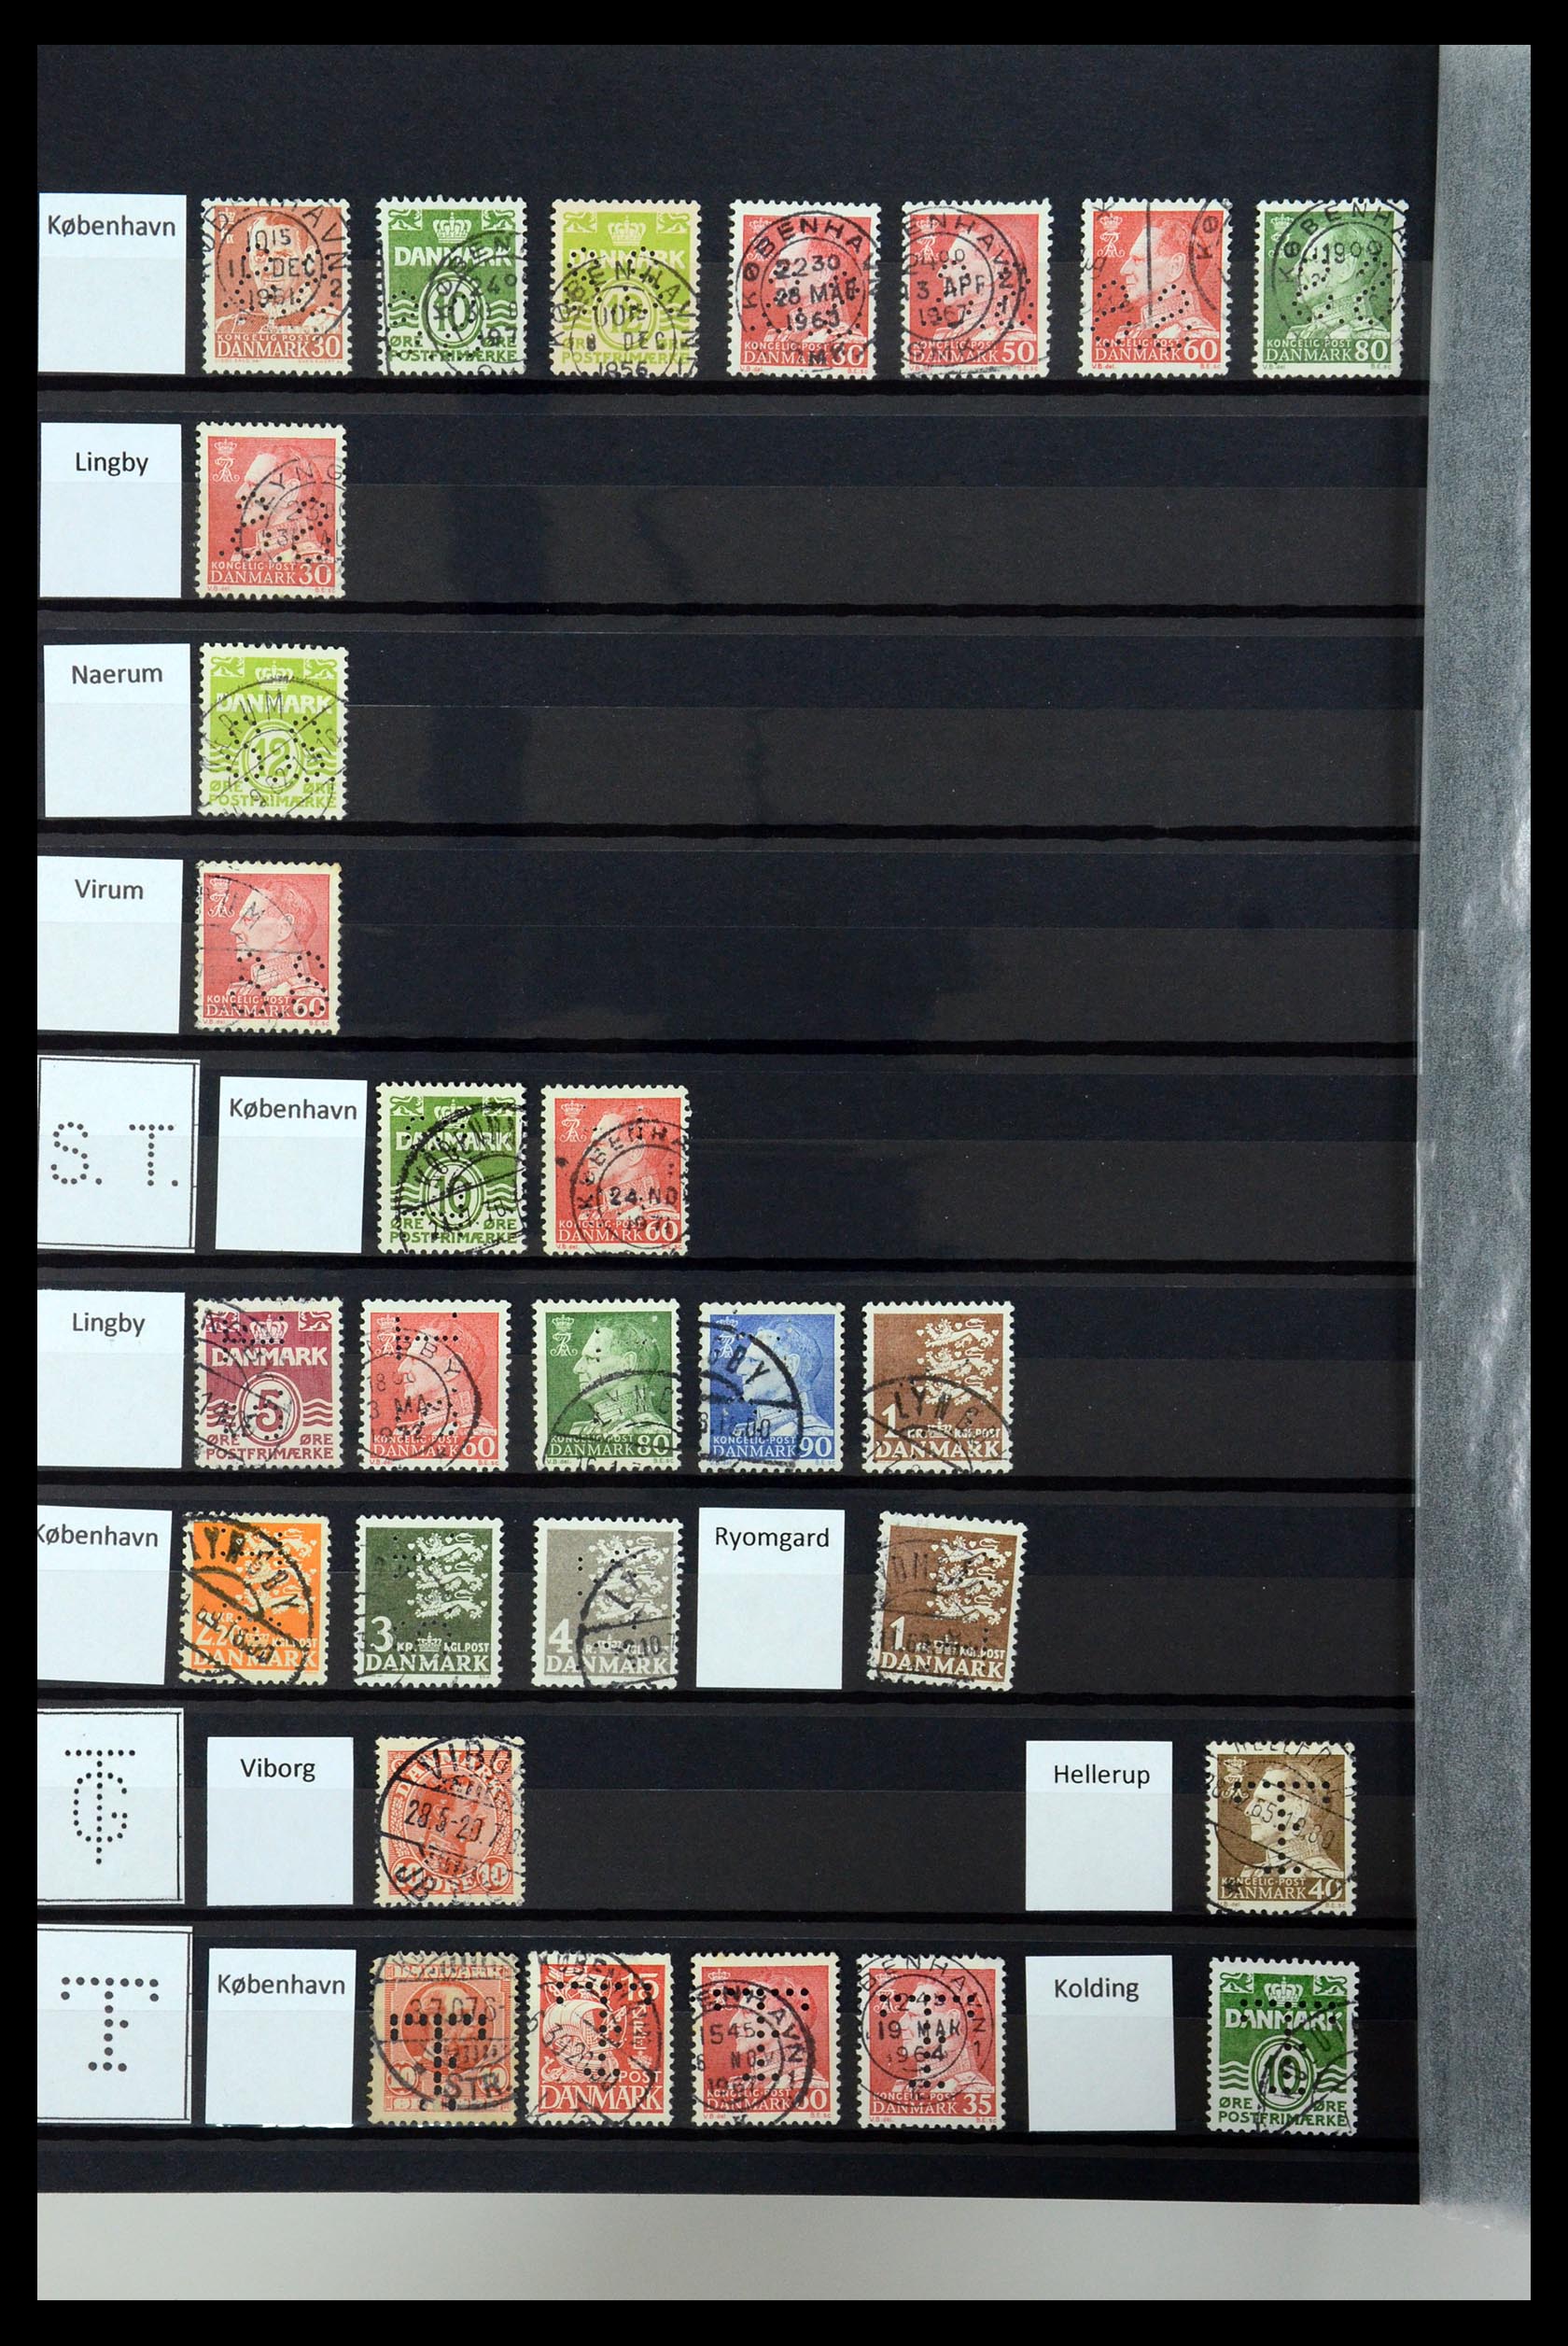 36396 105 - Stamp collection 36396 Denmark perfins.